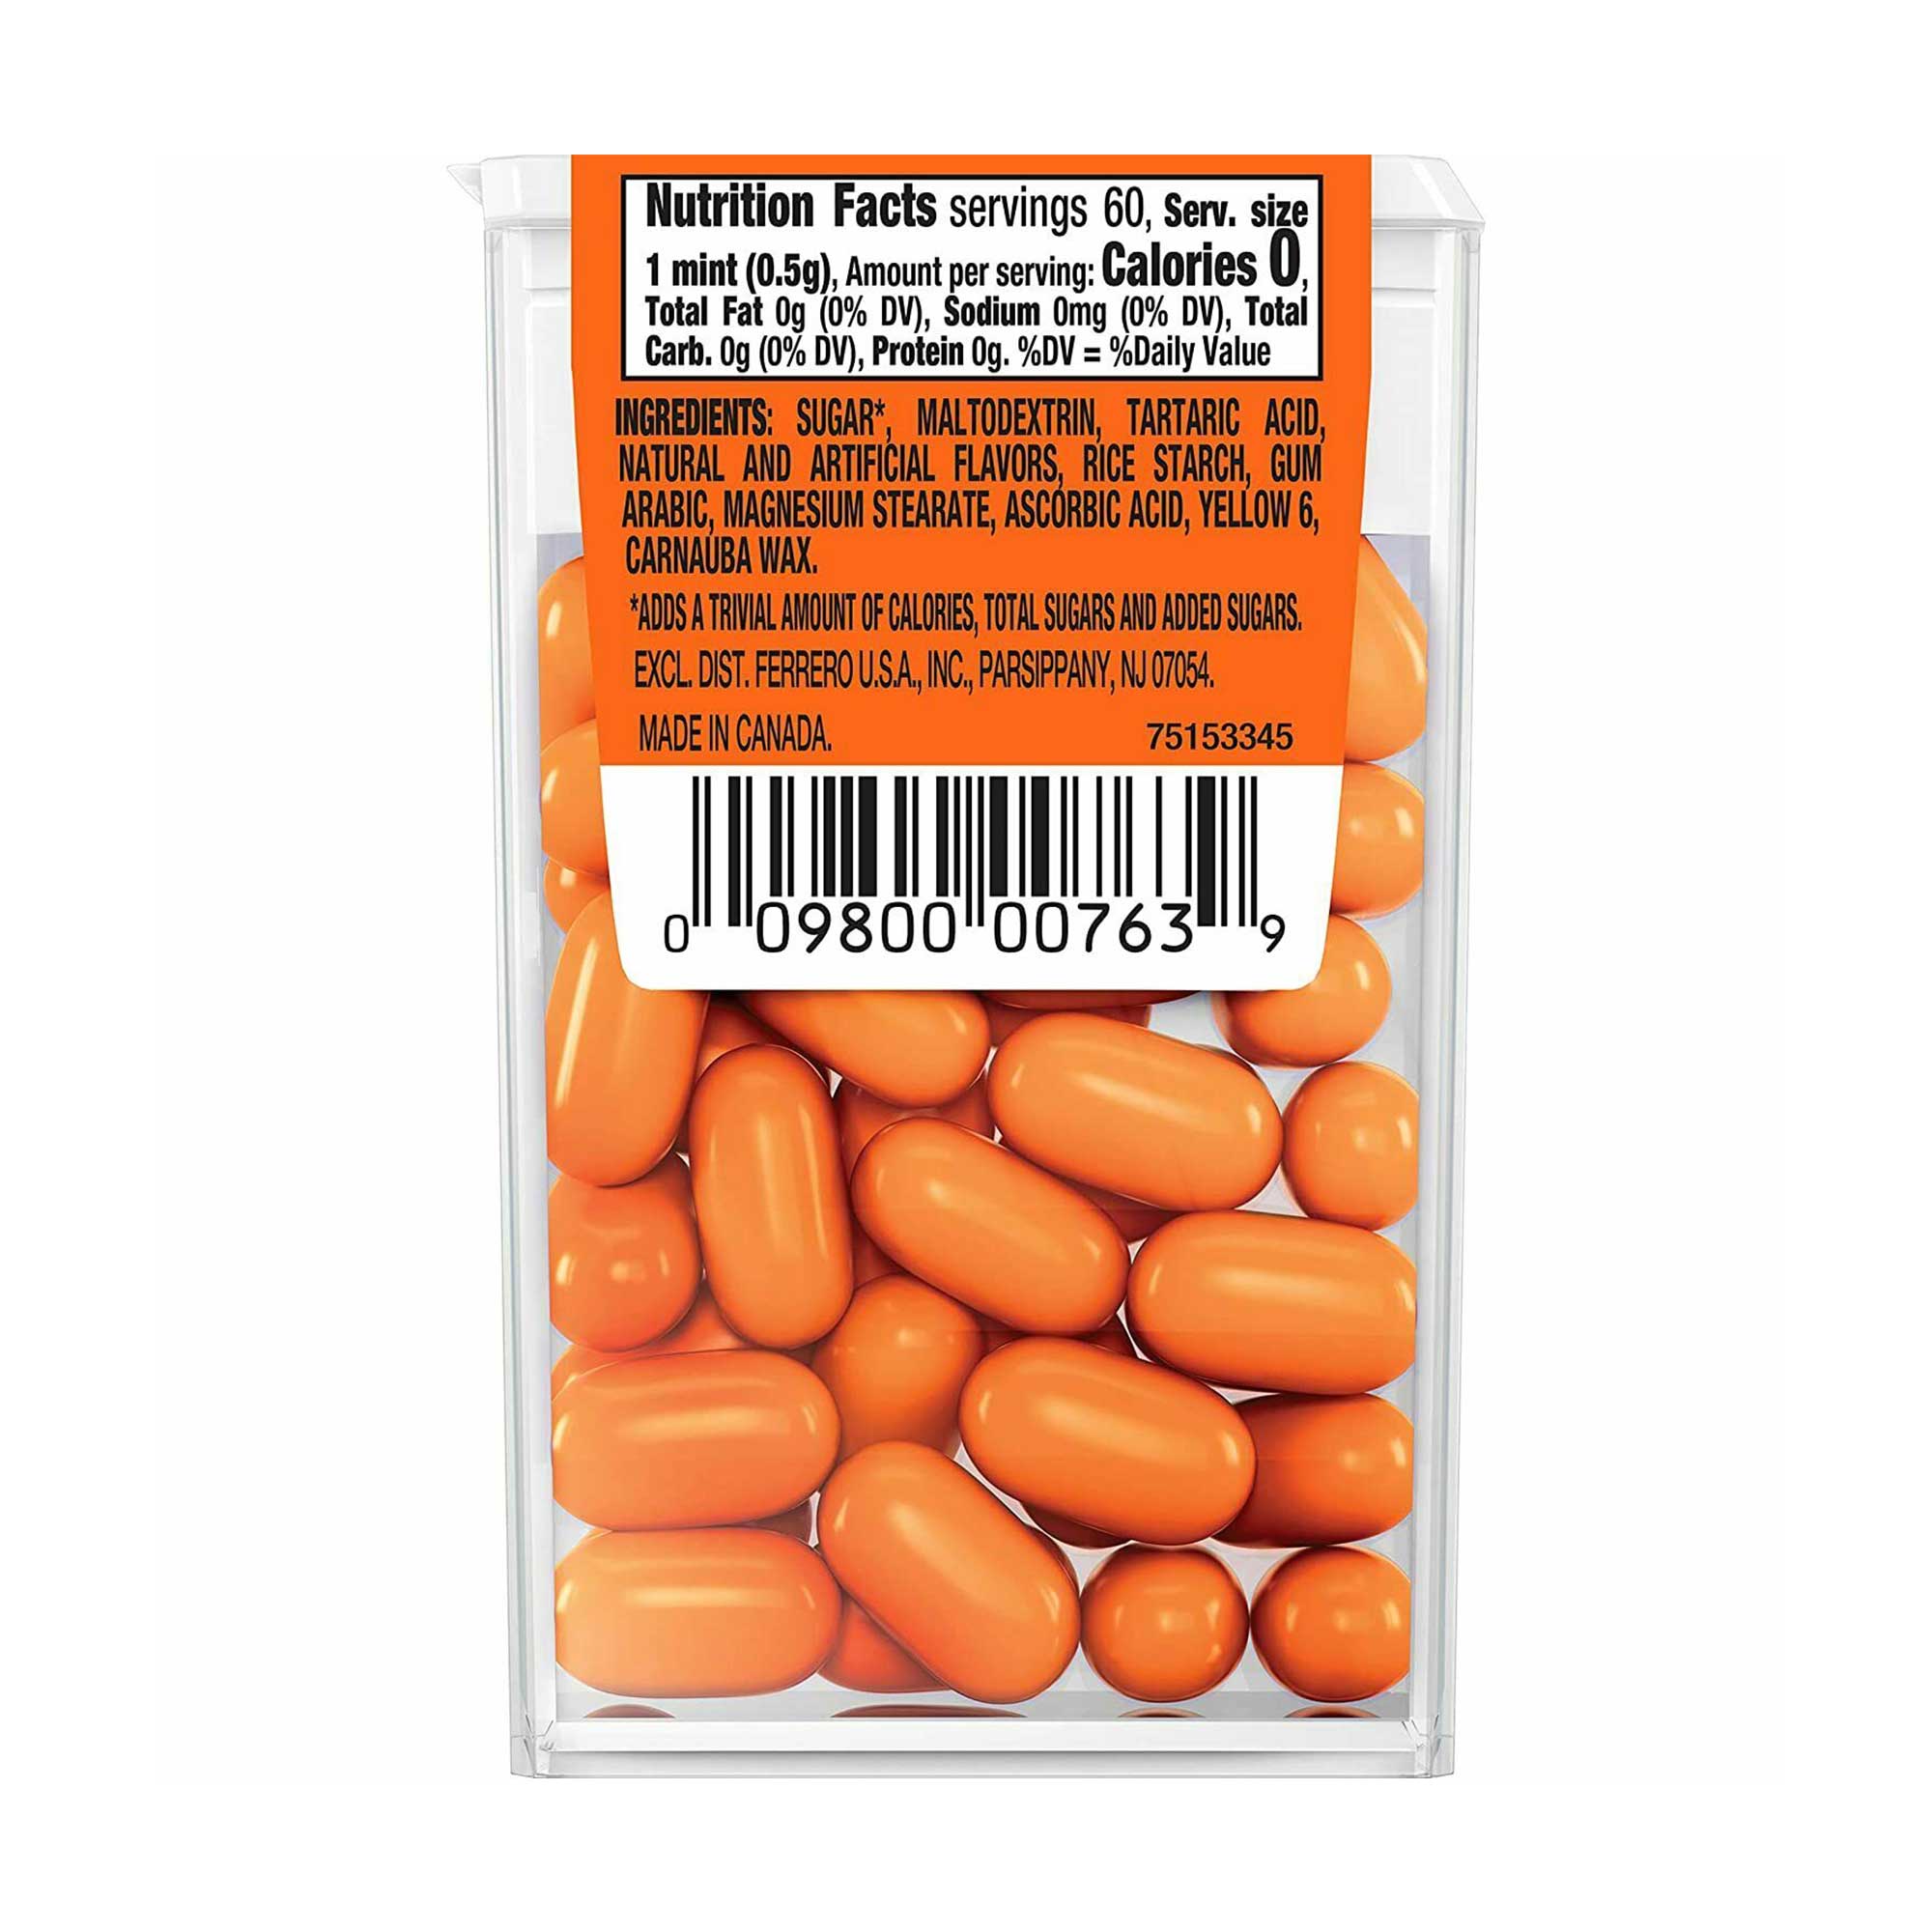 Tic Tac Orange Mints 1 OZ (Pack of 24)